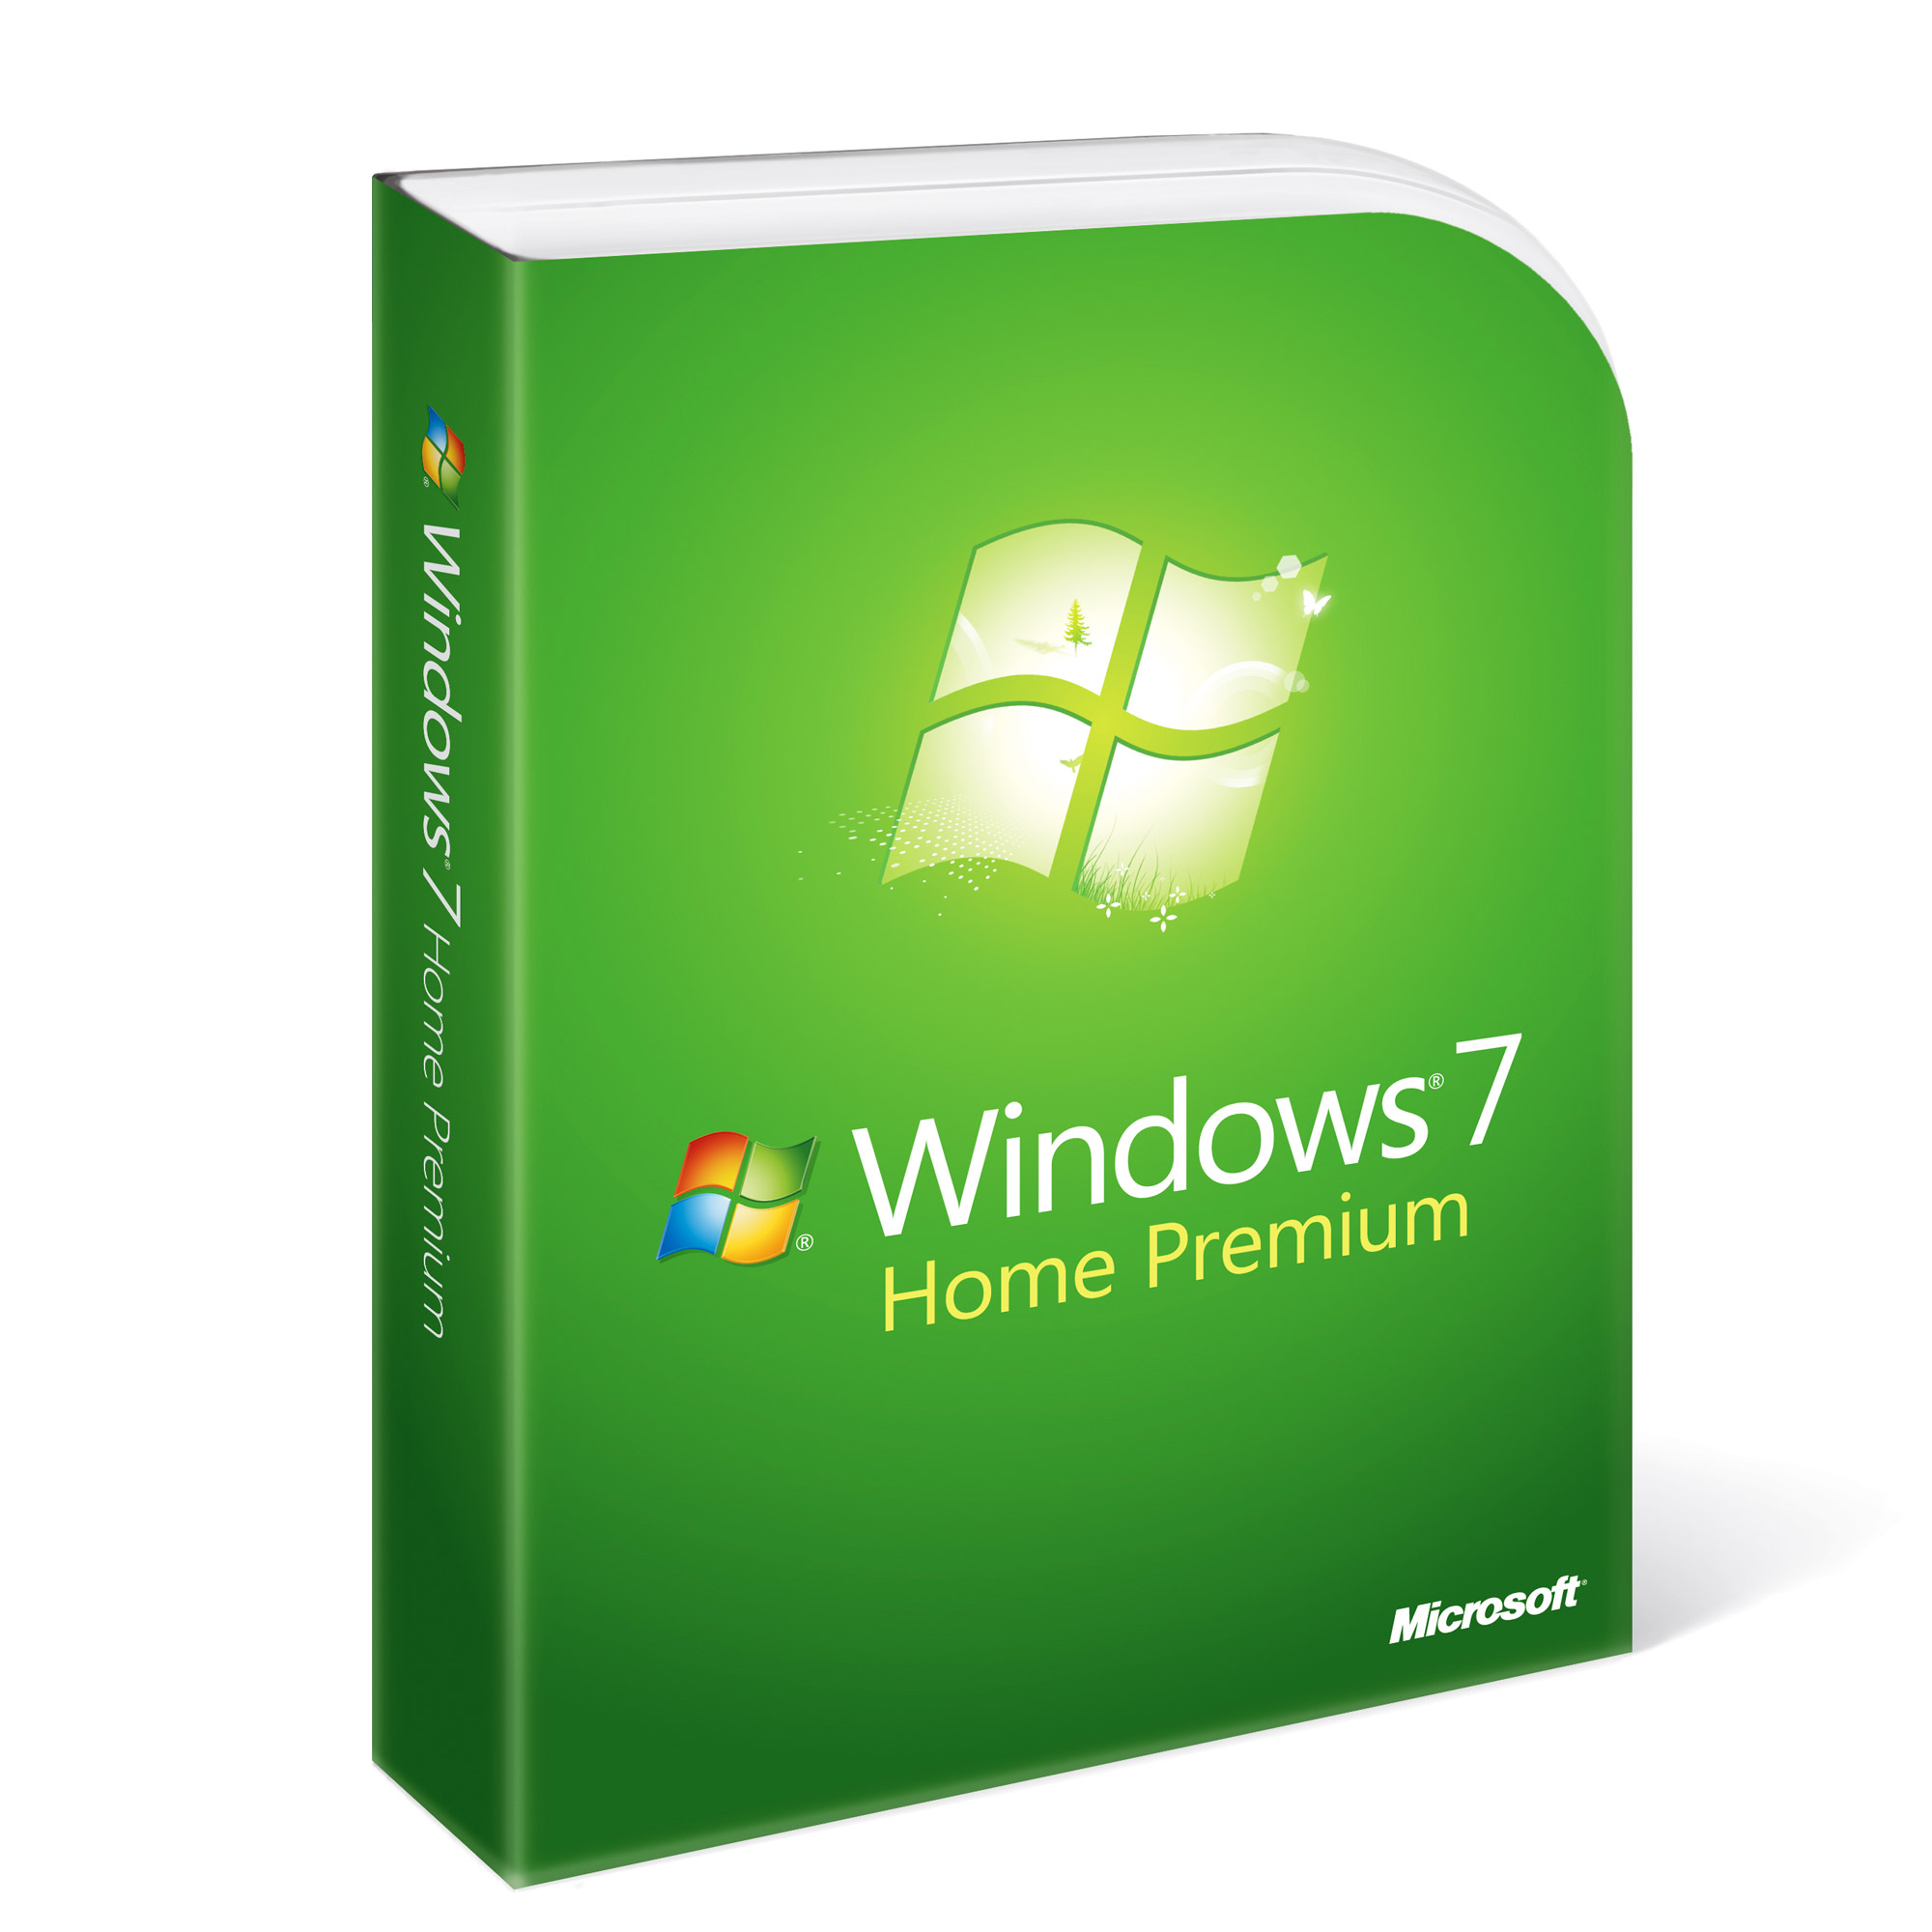 لایسنس اورجینال ویندوز 7 هوم پریمیوم  | Windows 7 Home Premium Original key